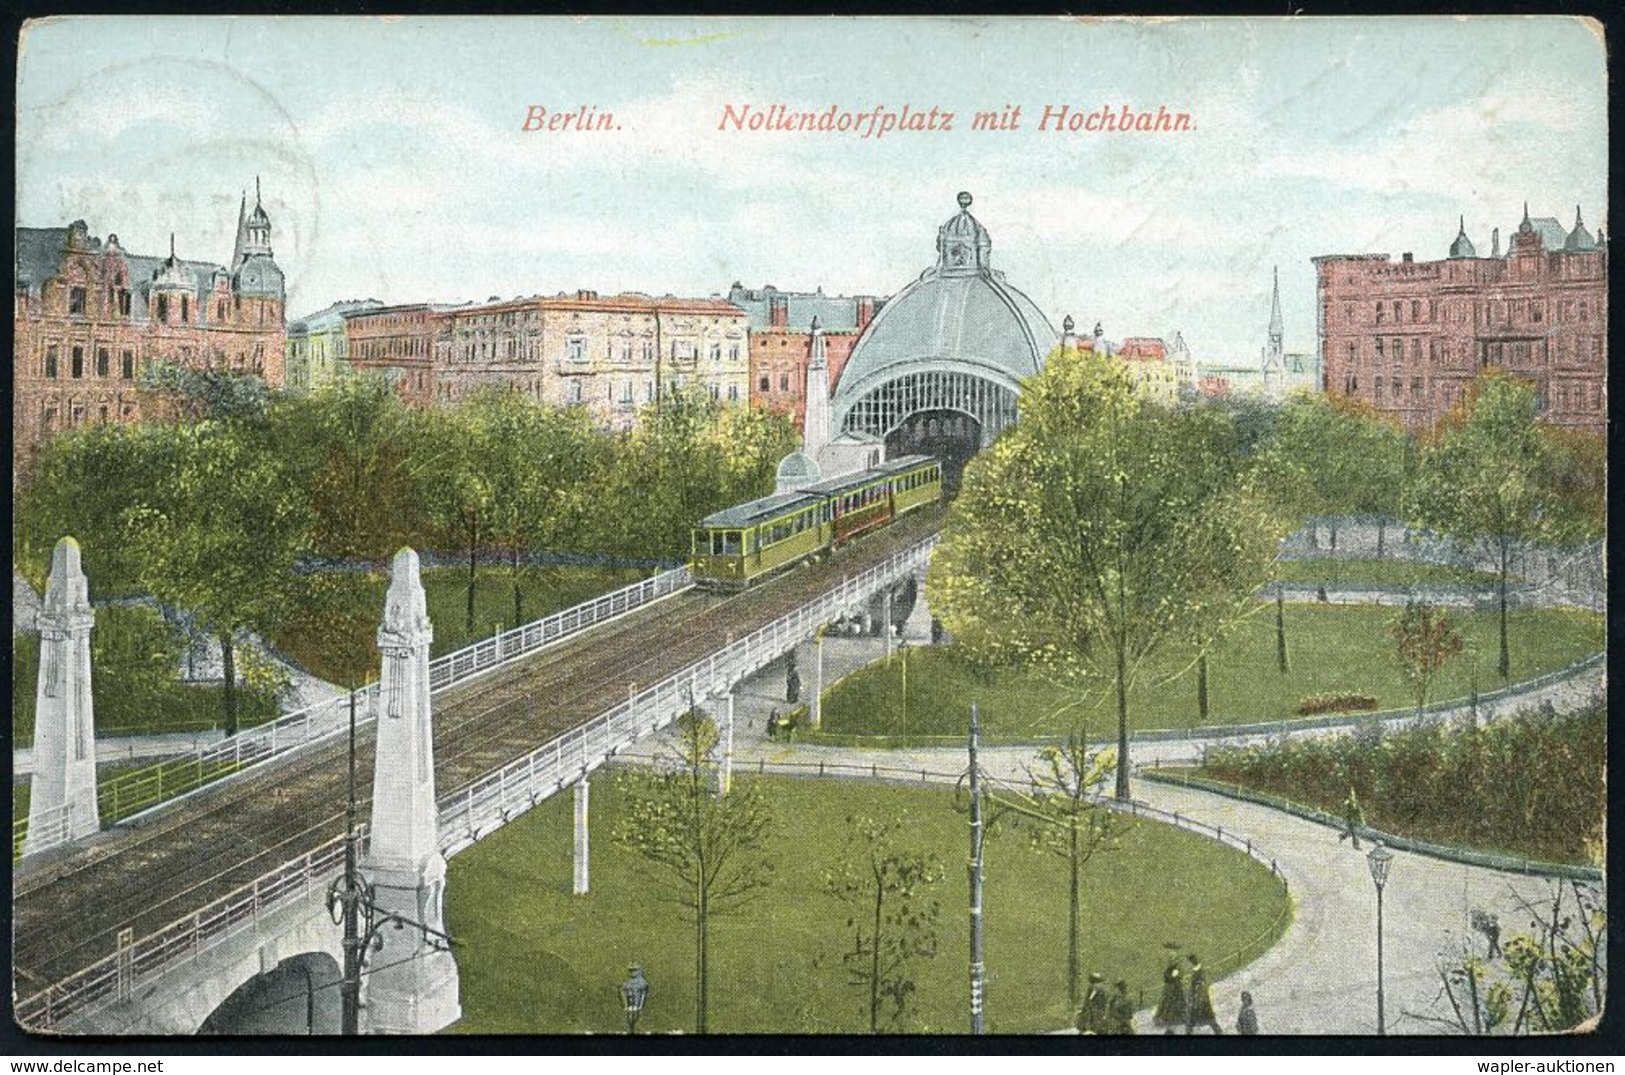 UNTERGRUNDBAHN /U-BAHN : Berlin-Schöneberg 1904/13 U-Bahnhof Nollendorfplatz, 8 verschiedene Color-Foto-Ak., teils gebr.